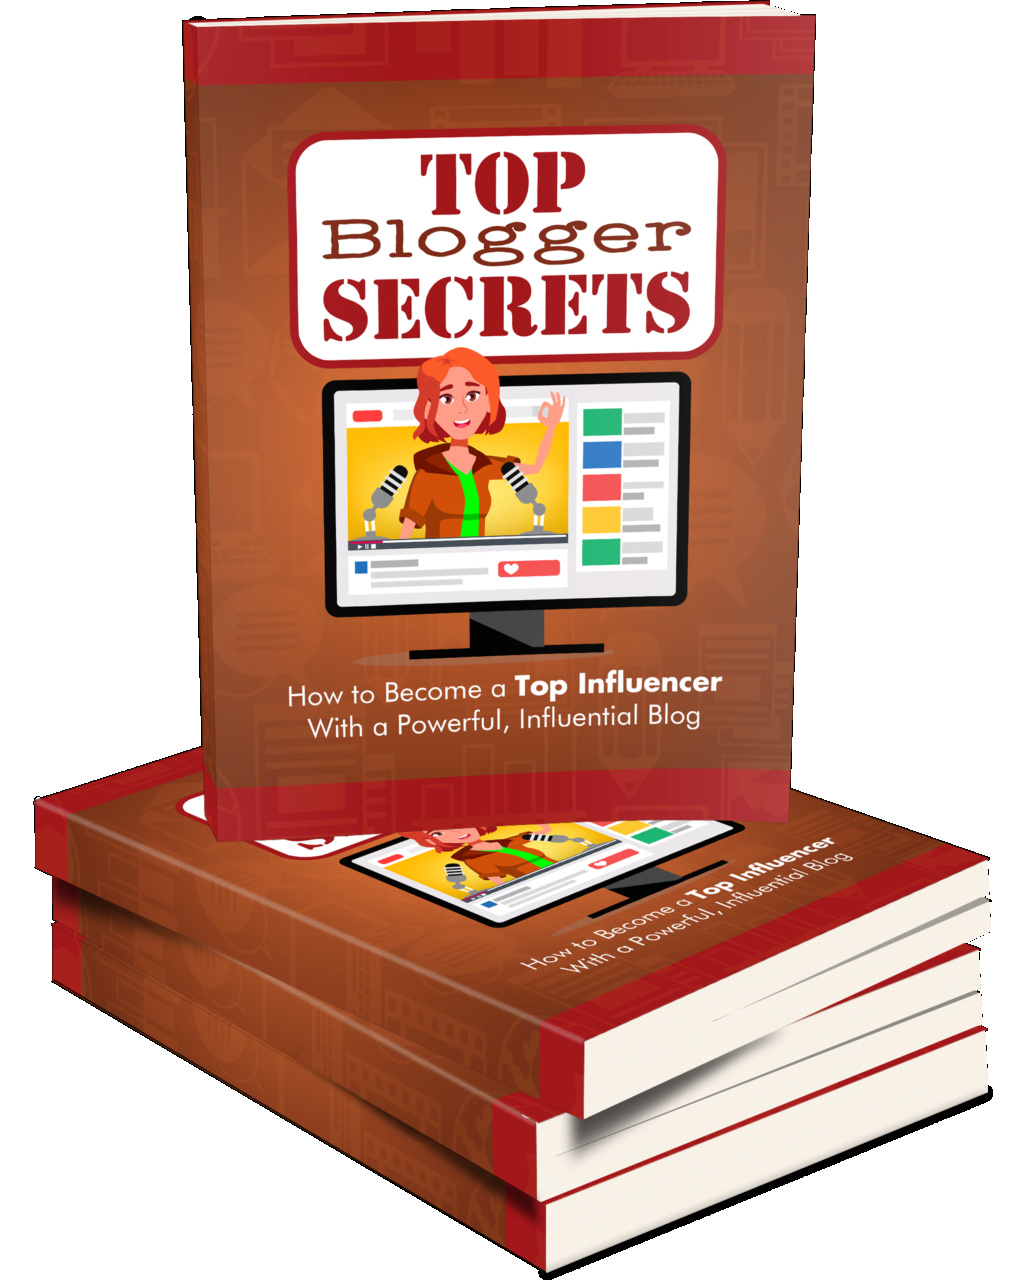 Blogging Secrets